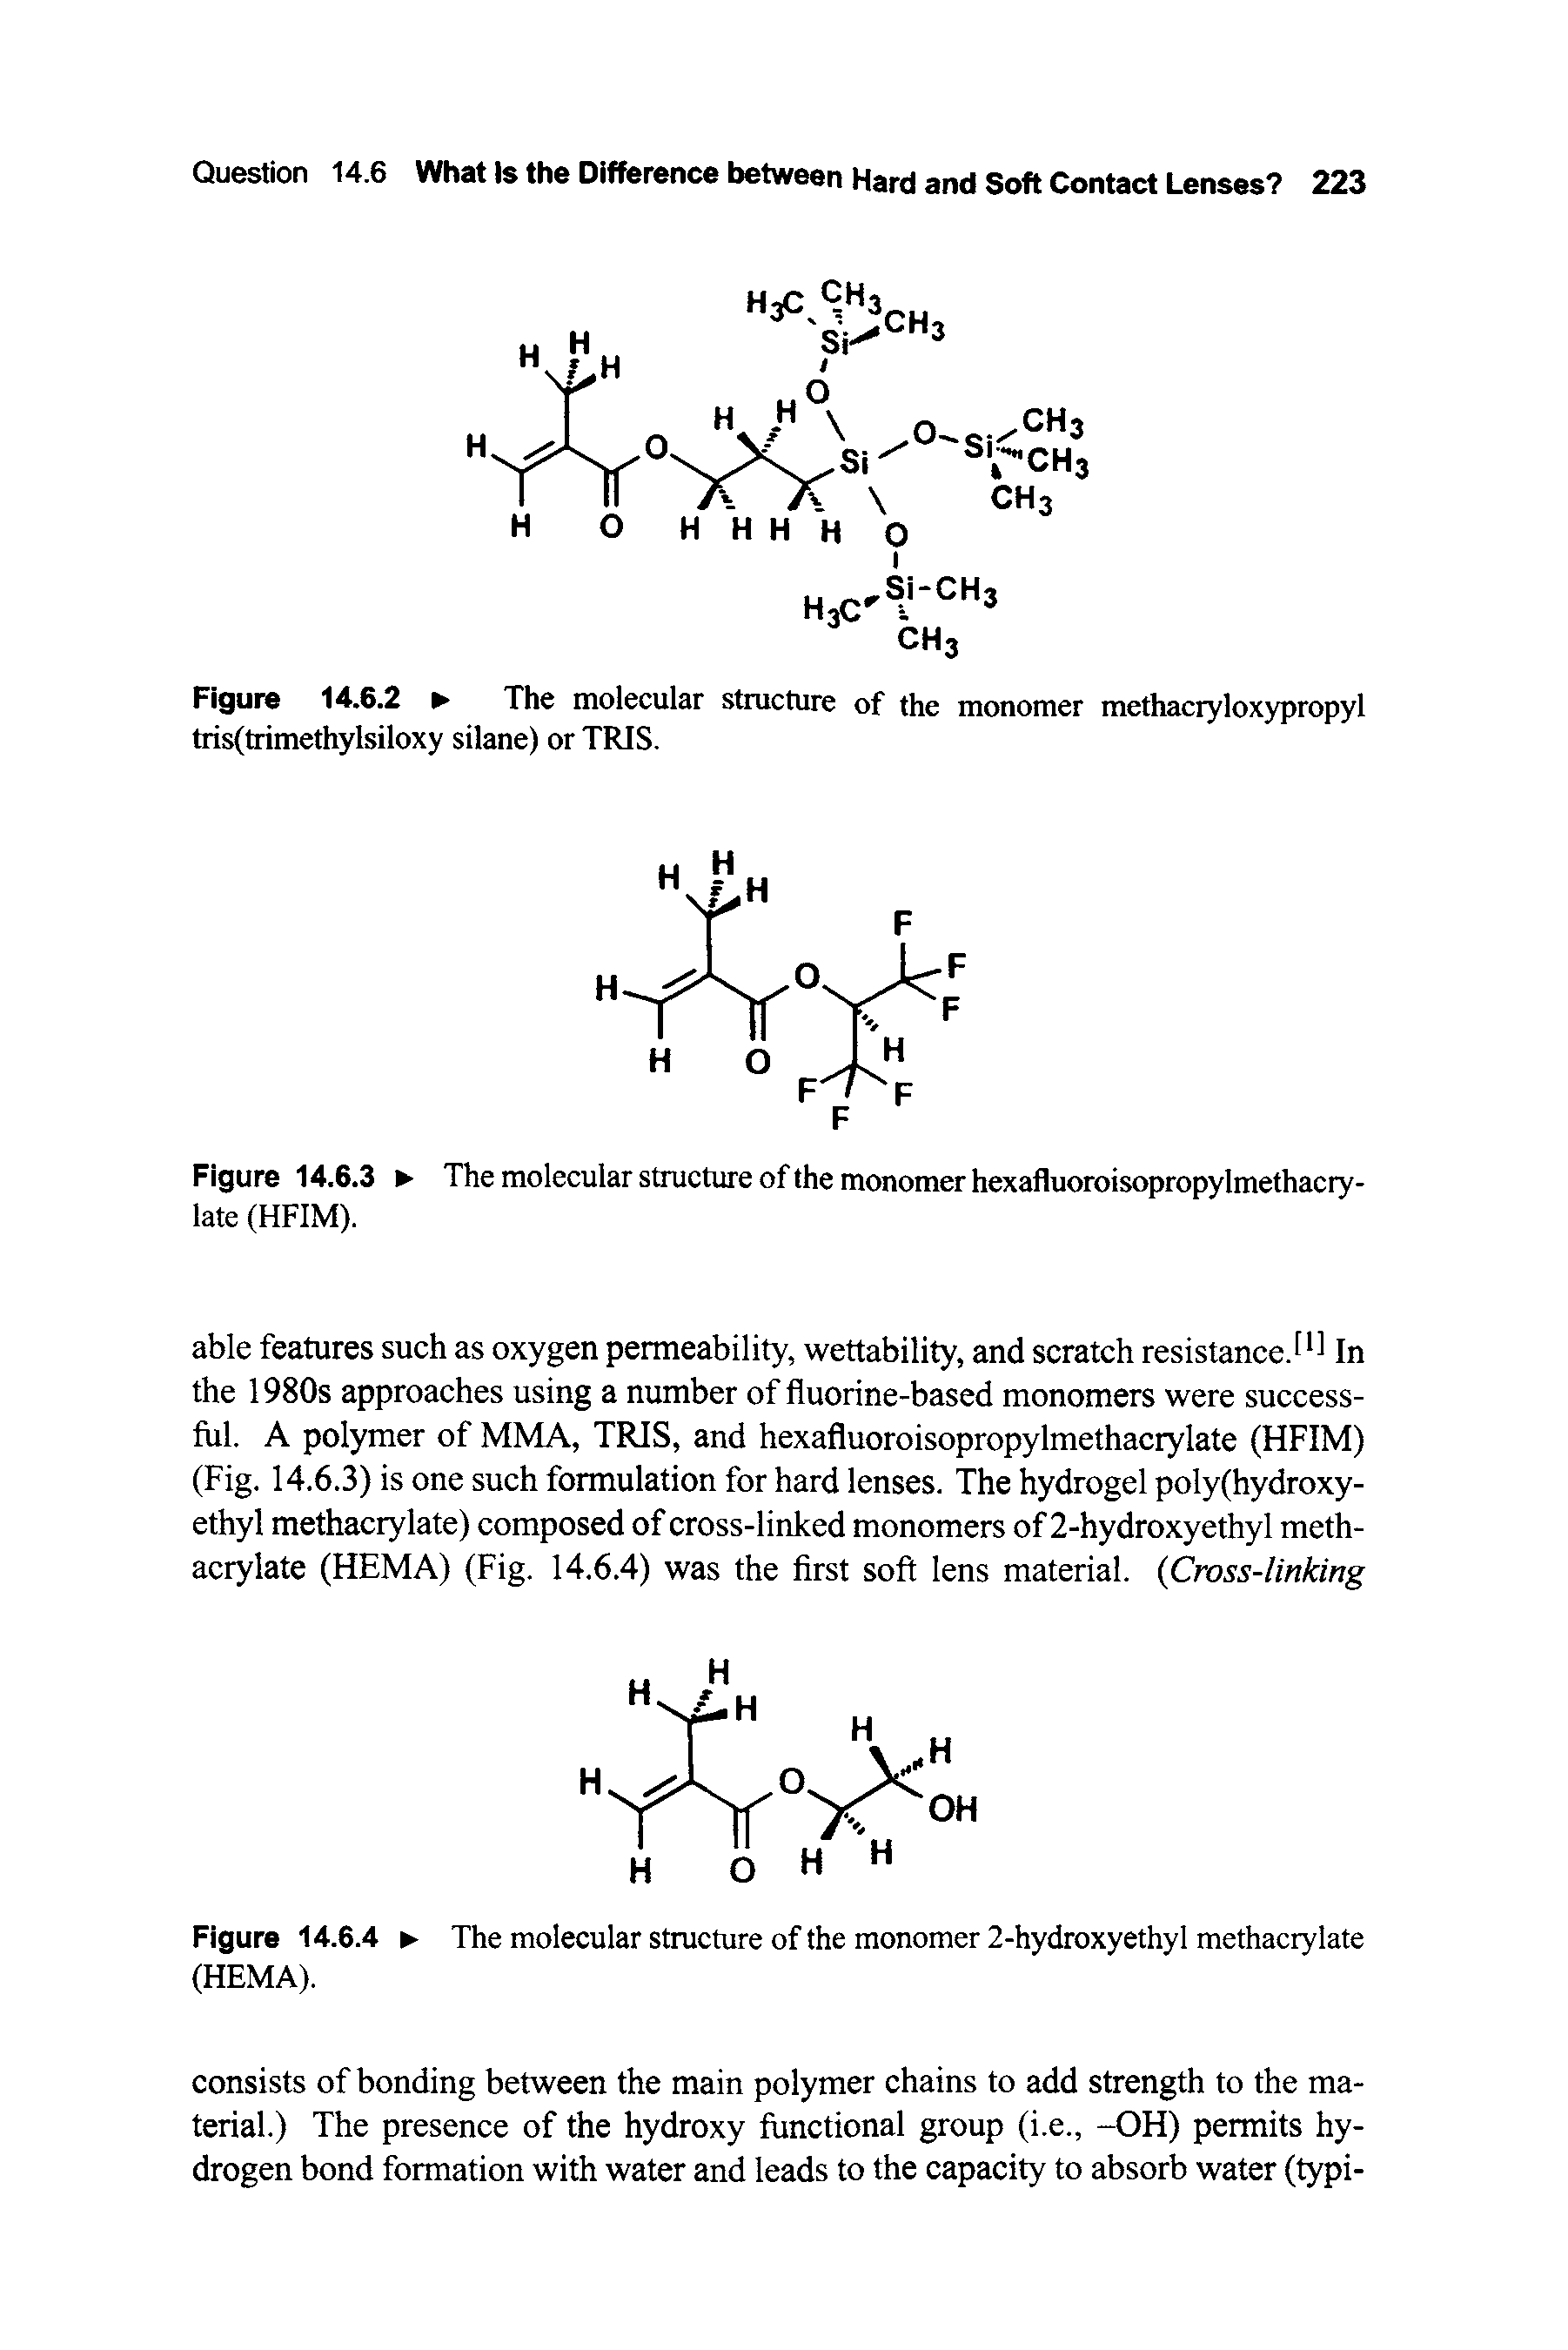 Figure 14.6.2 The molecular structure of the monomer methacryloxypropyl tris(trimethylsiloxy silane) or TRIS.